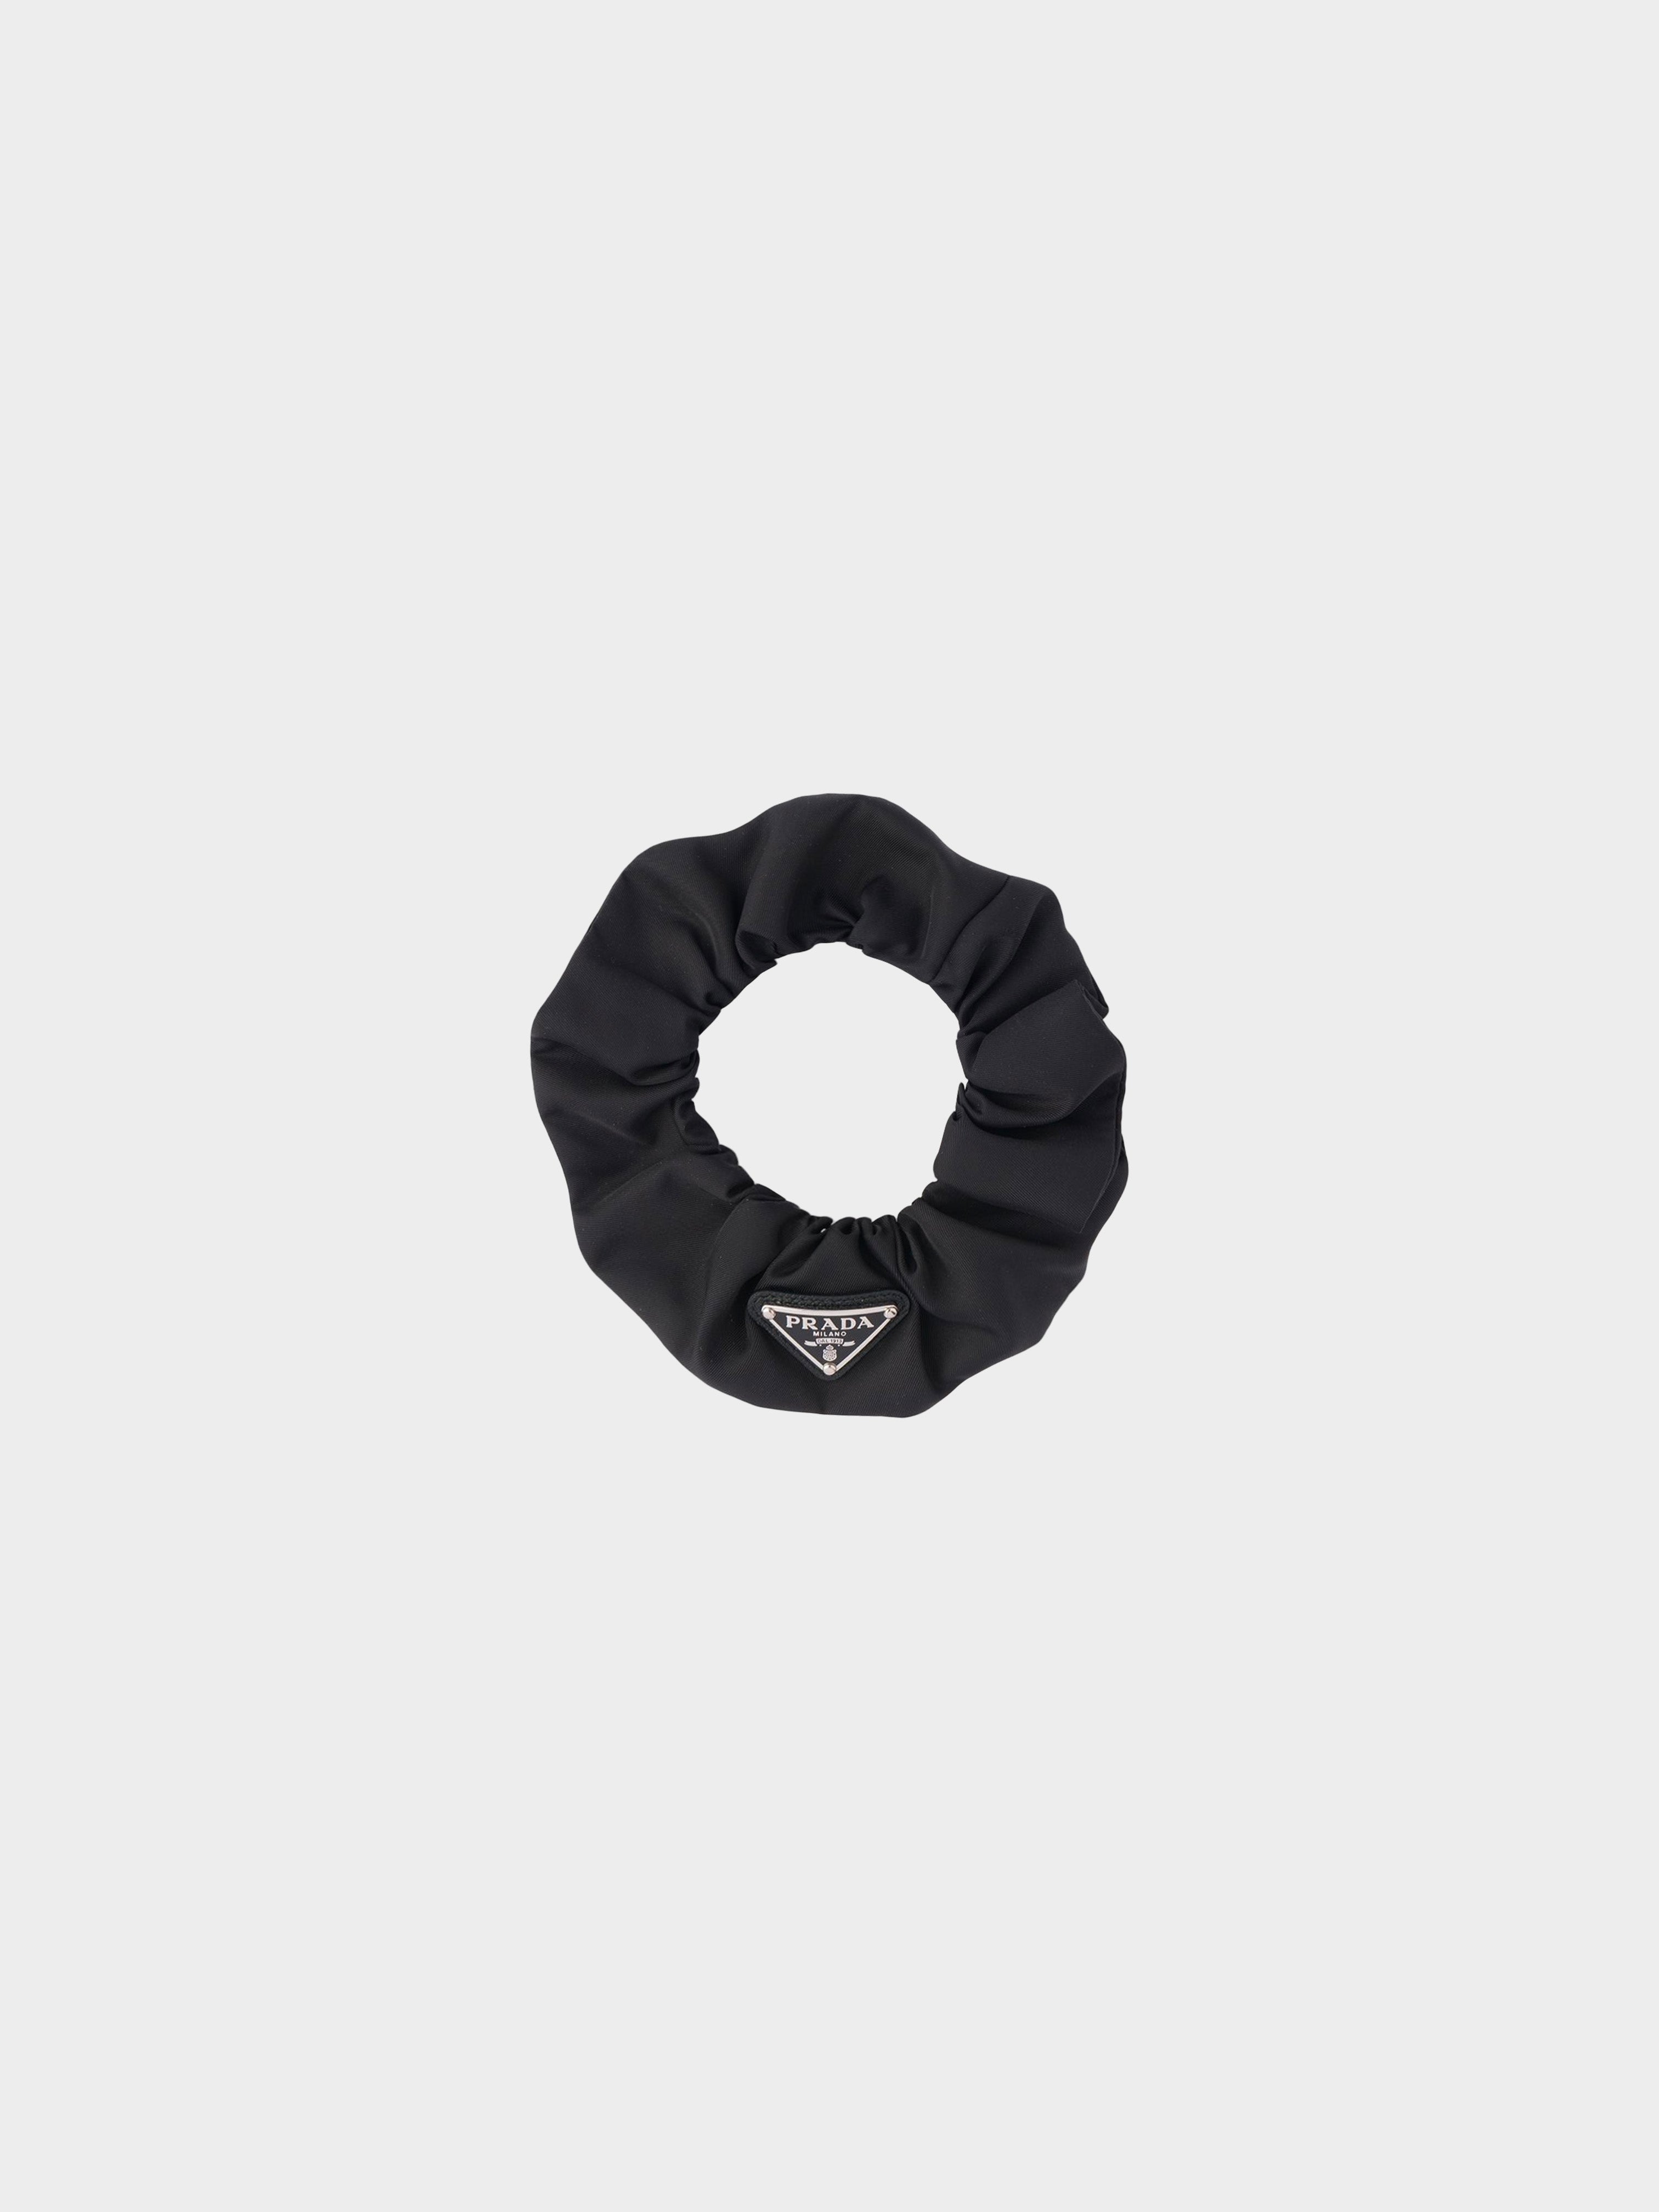 Prada 2020s Re-Nylon Black Logo Scrunchie